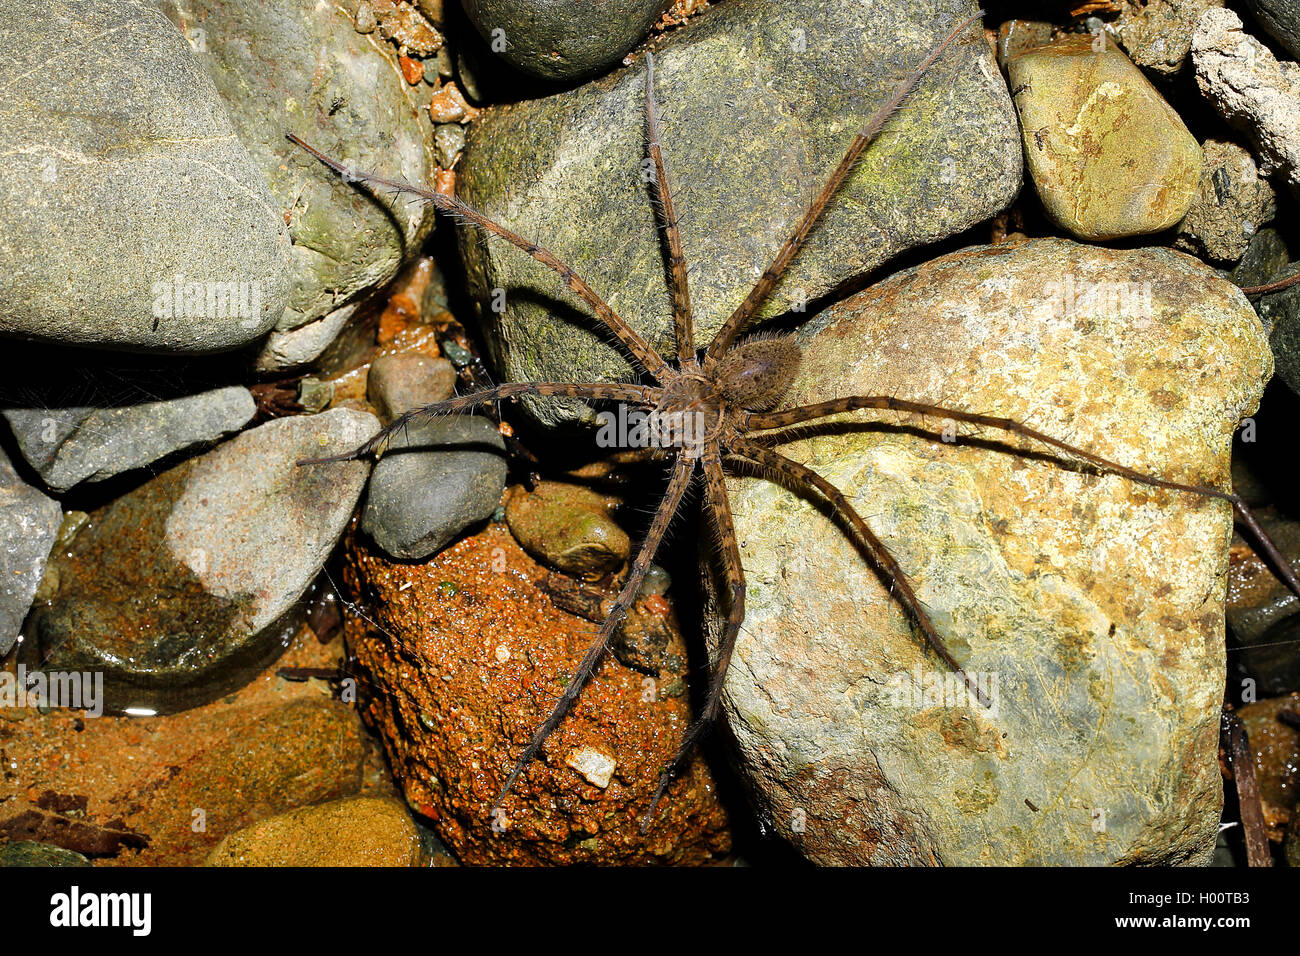 Arañas de río fotografías e imágenes de alta resolución - Alamy